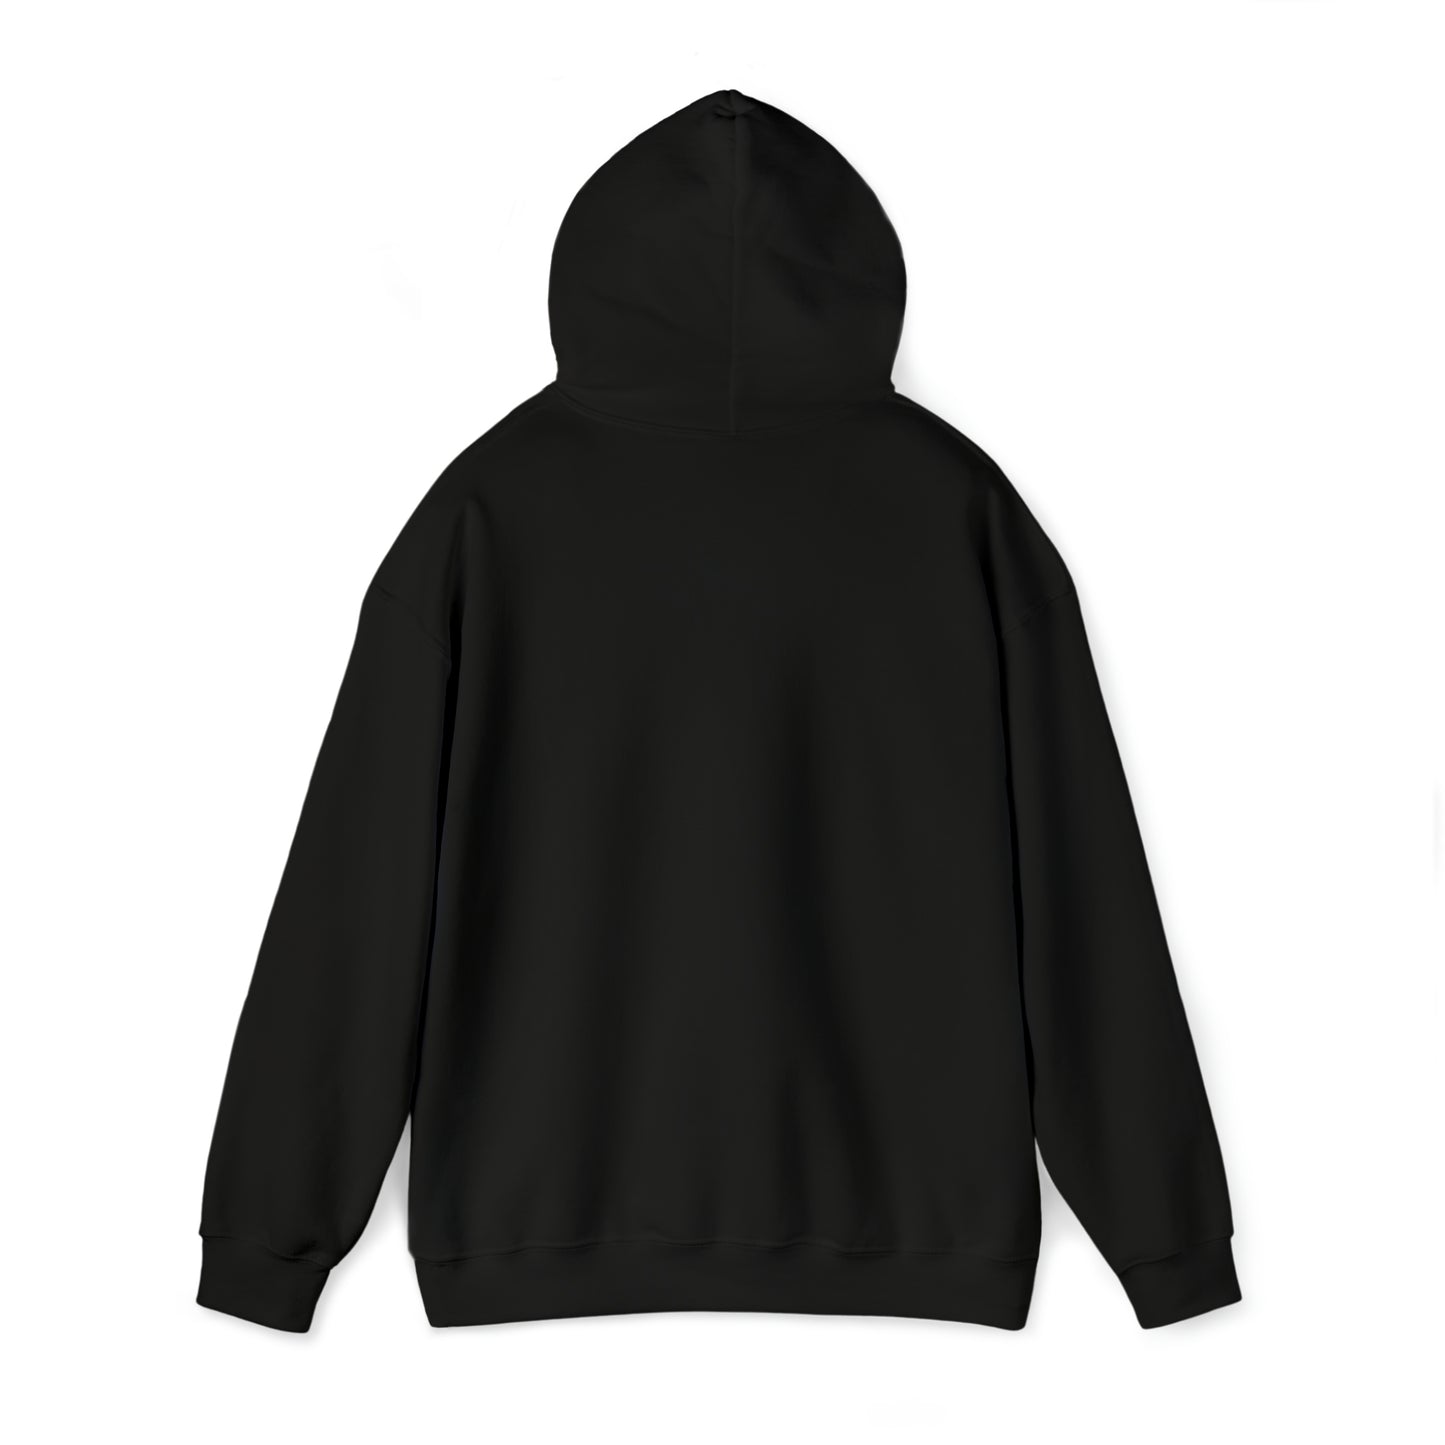 Fantastic Vice - Unisex Heavy Blend™ Hooded Sweatshirt